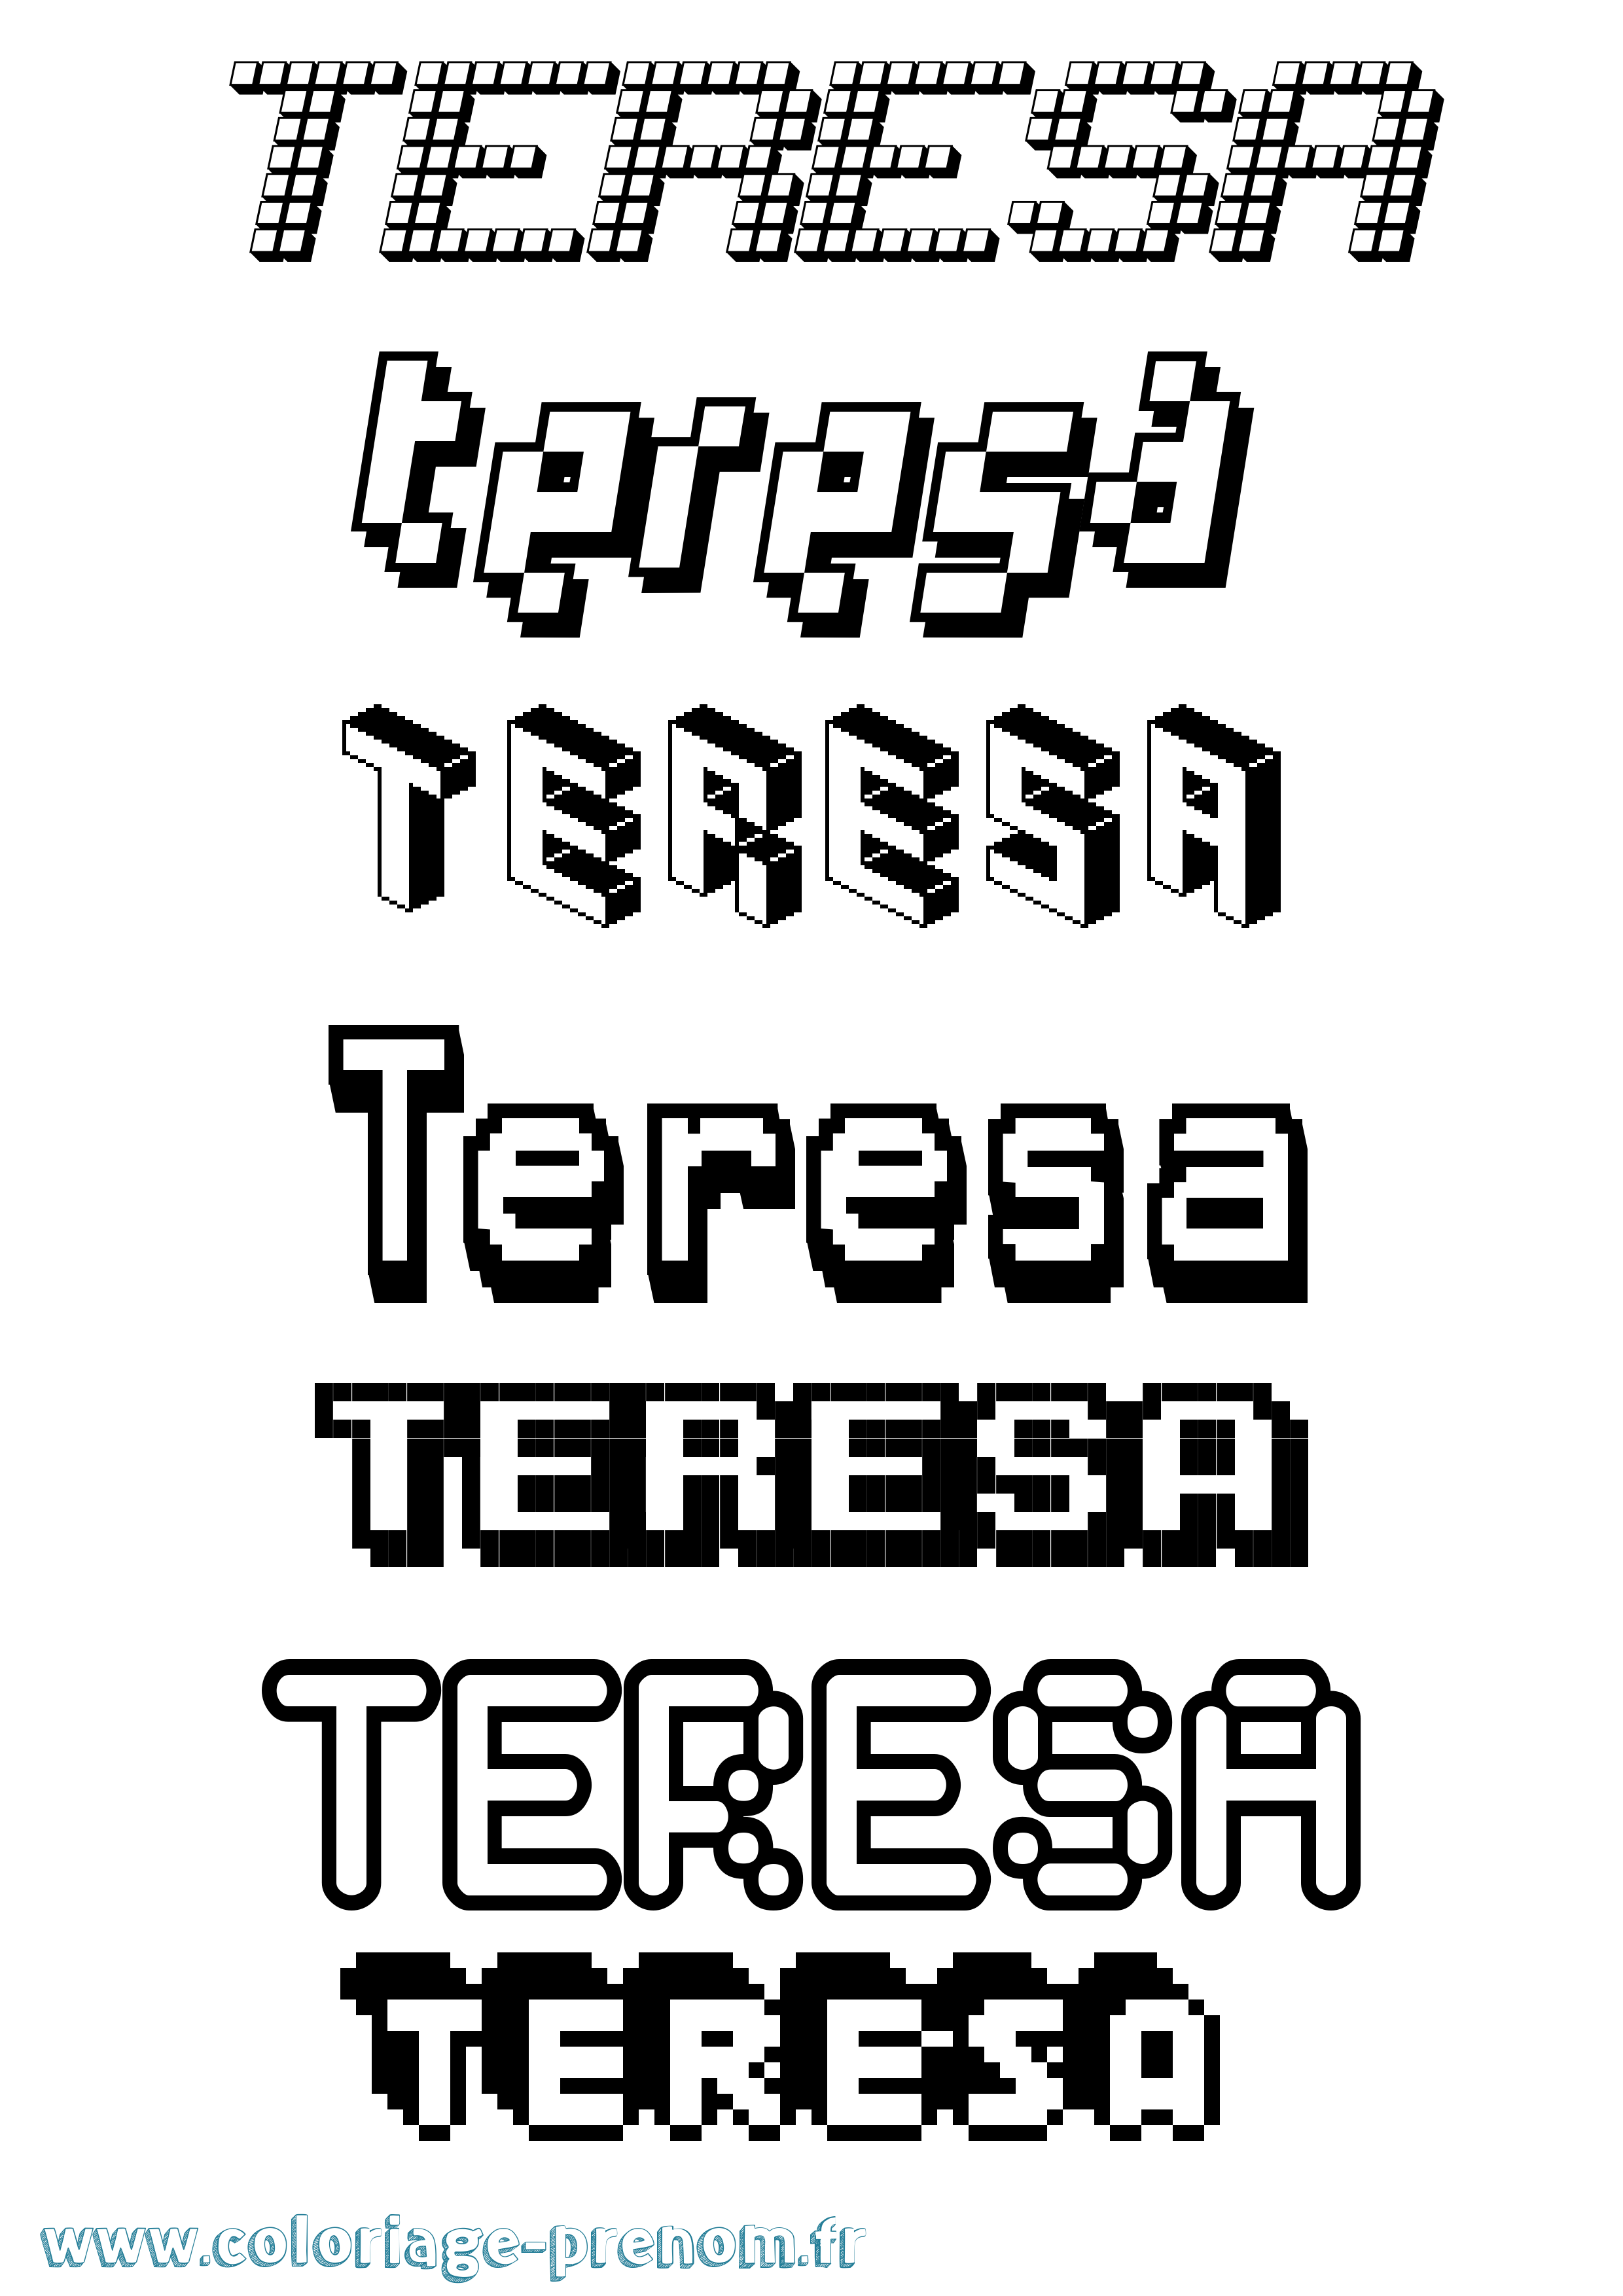 Coloriage prénom Teresa Pixel